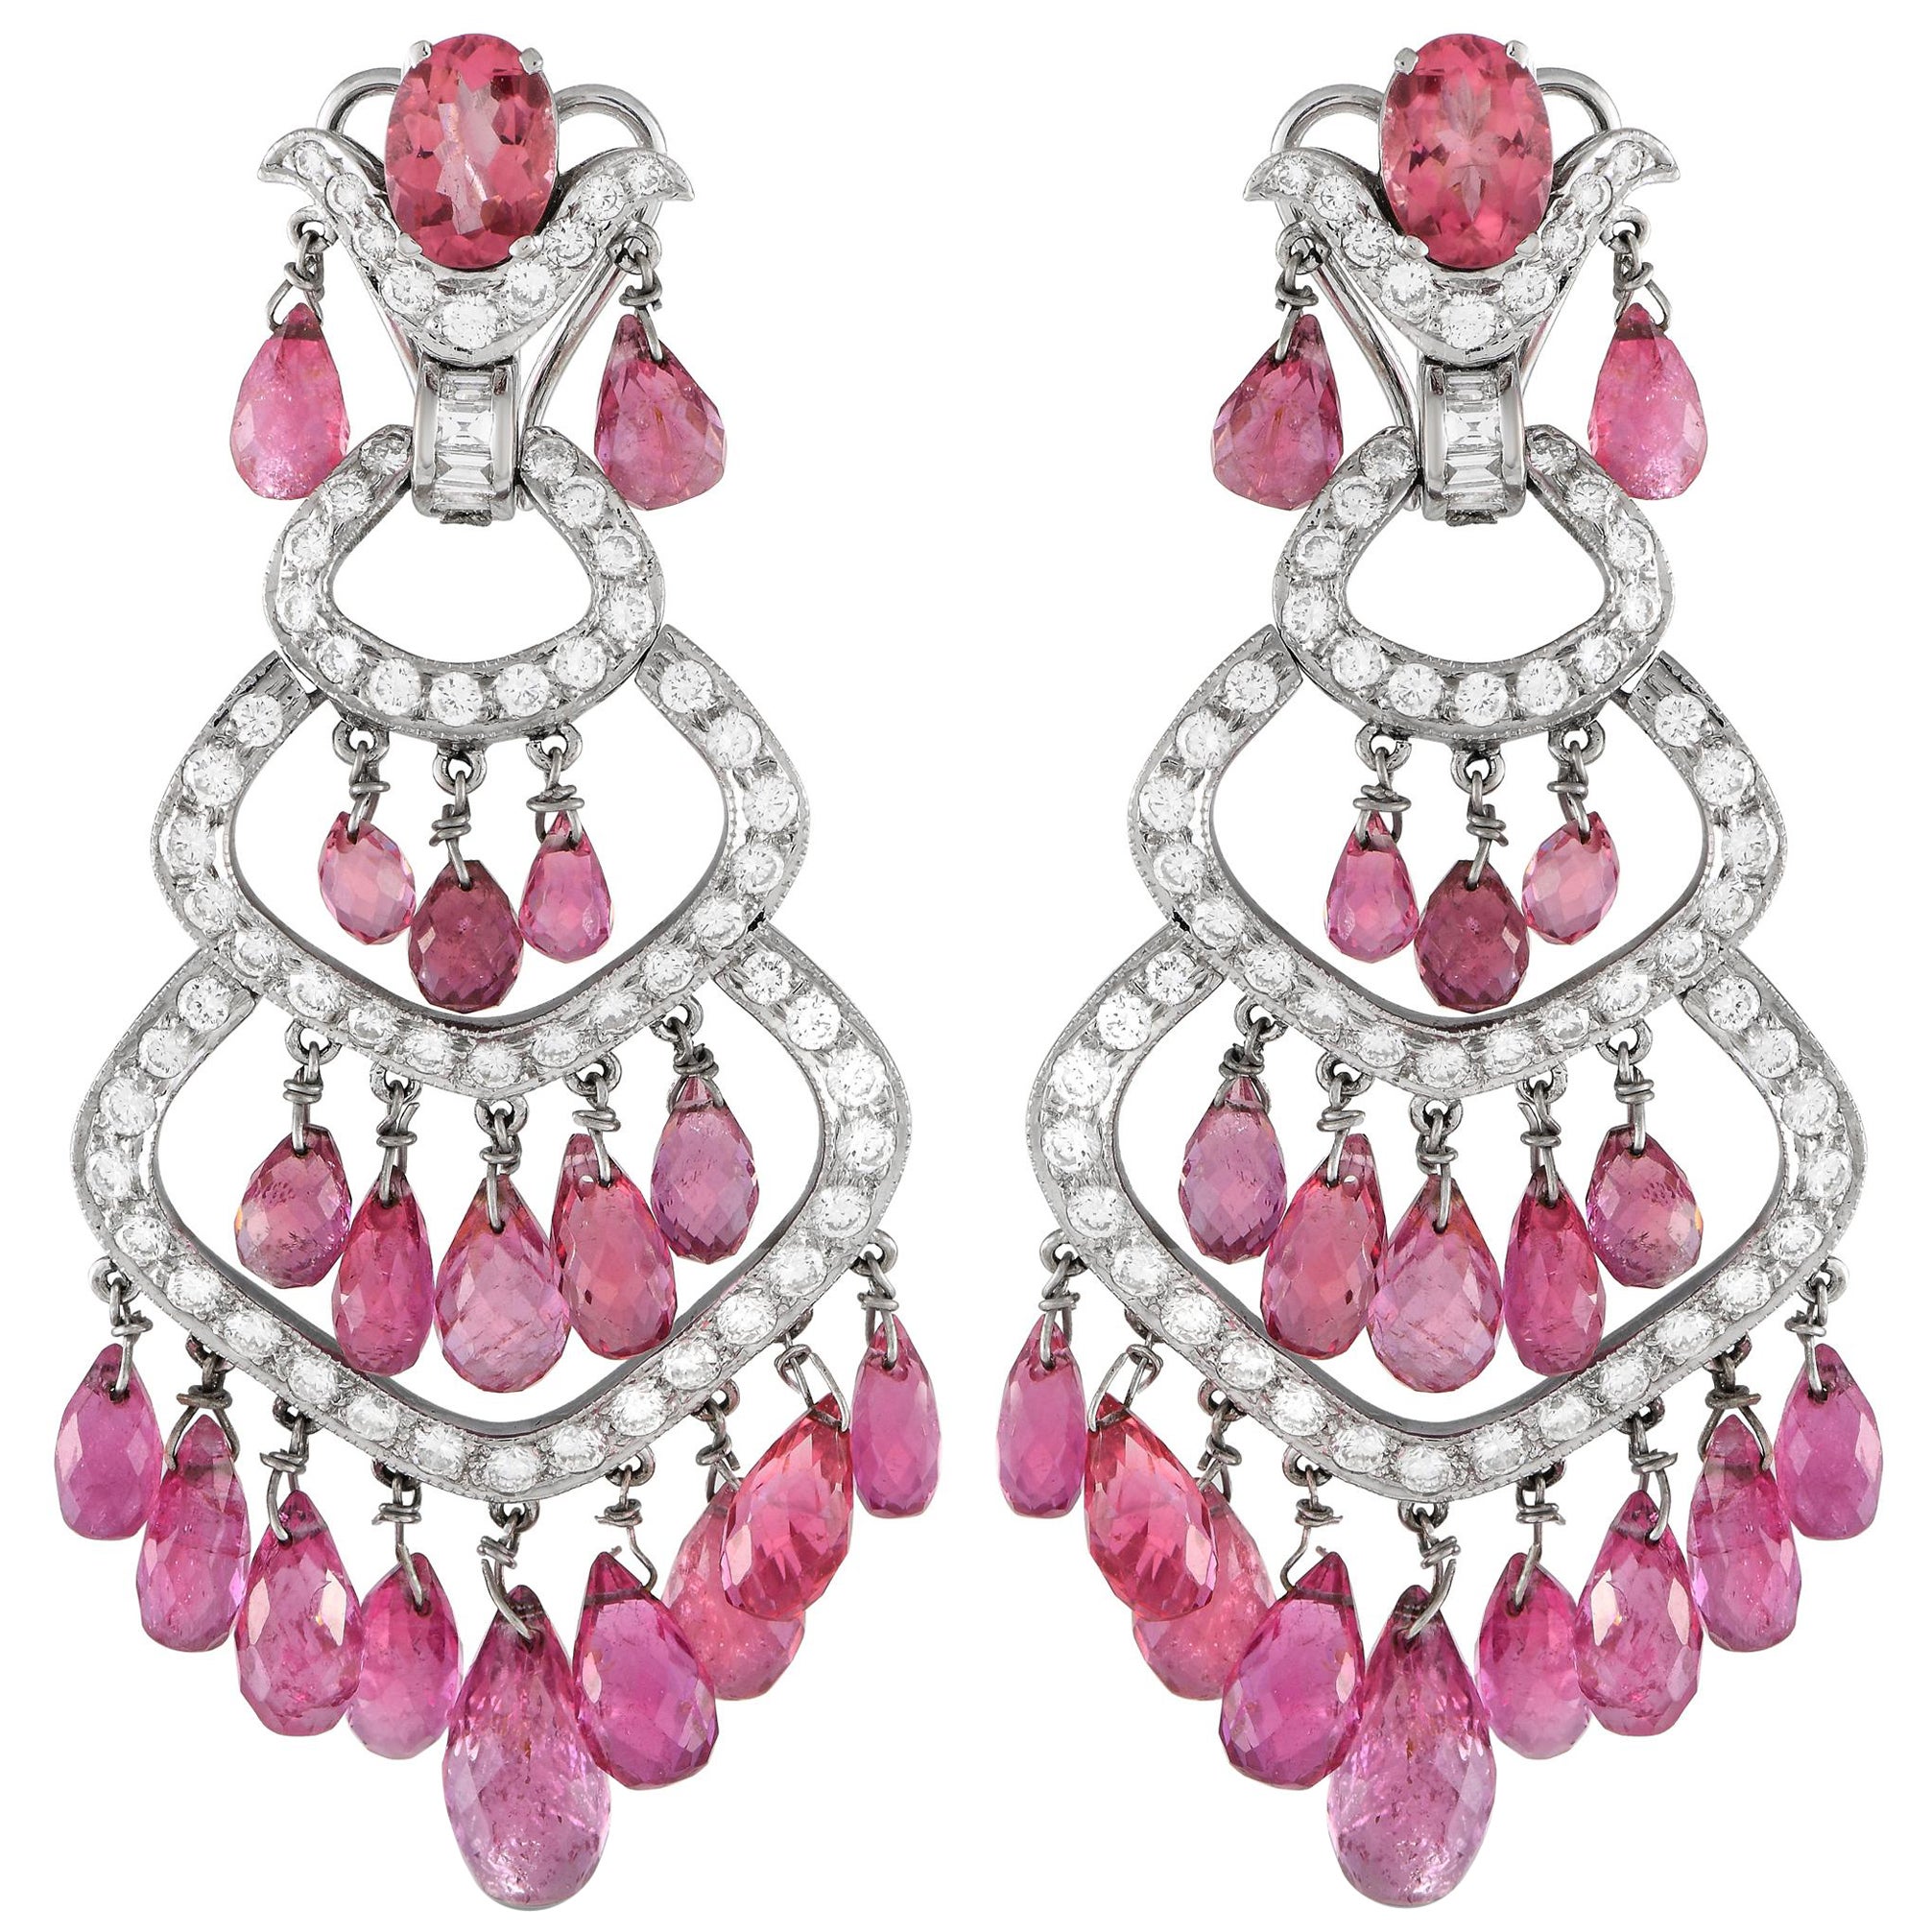 18K White Gold 2.65ct Diamond & Pink Tourmaline Chandelier Earrings MF06-013024